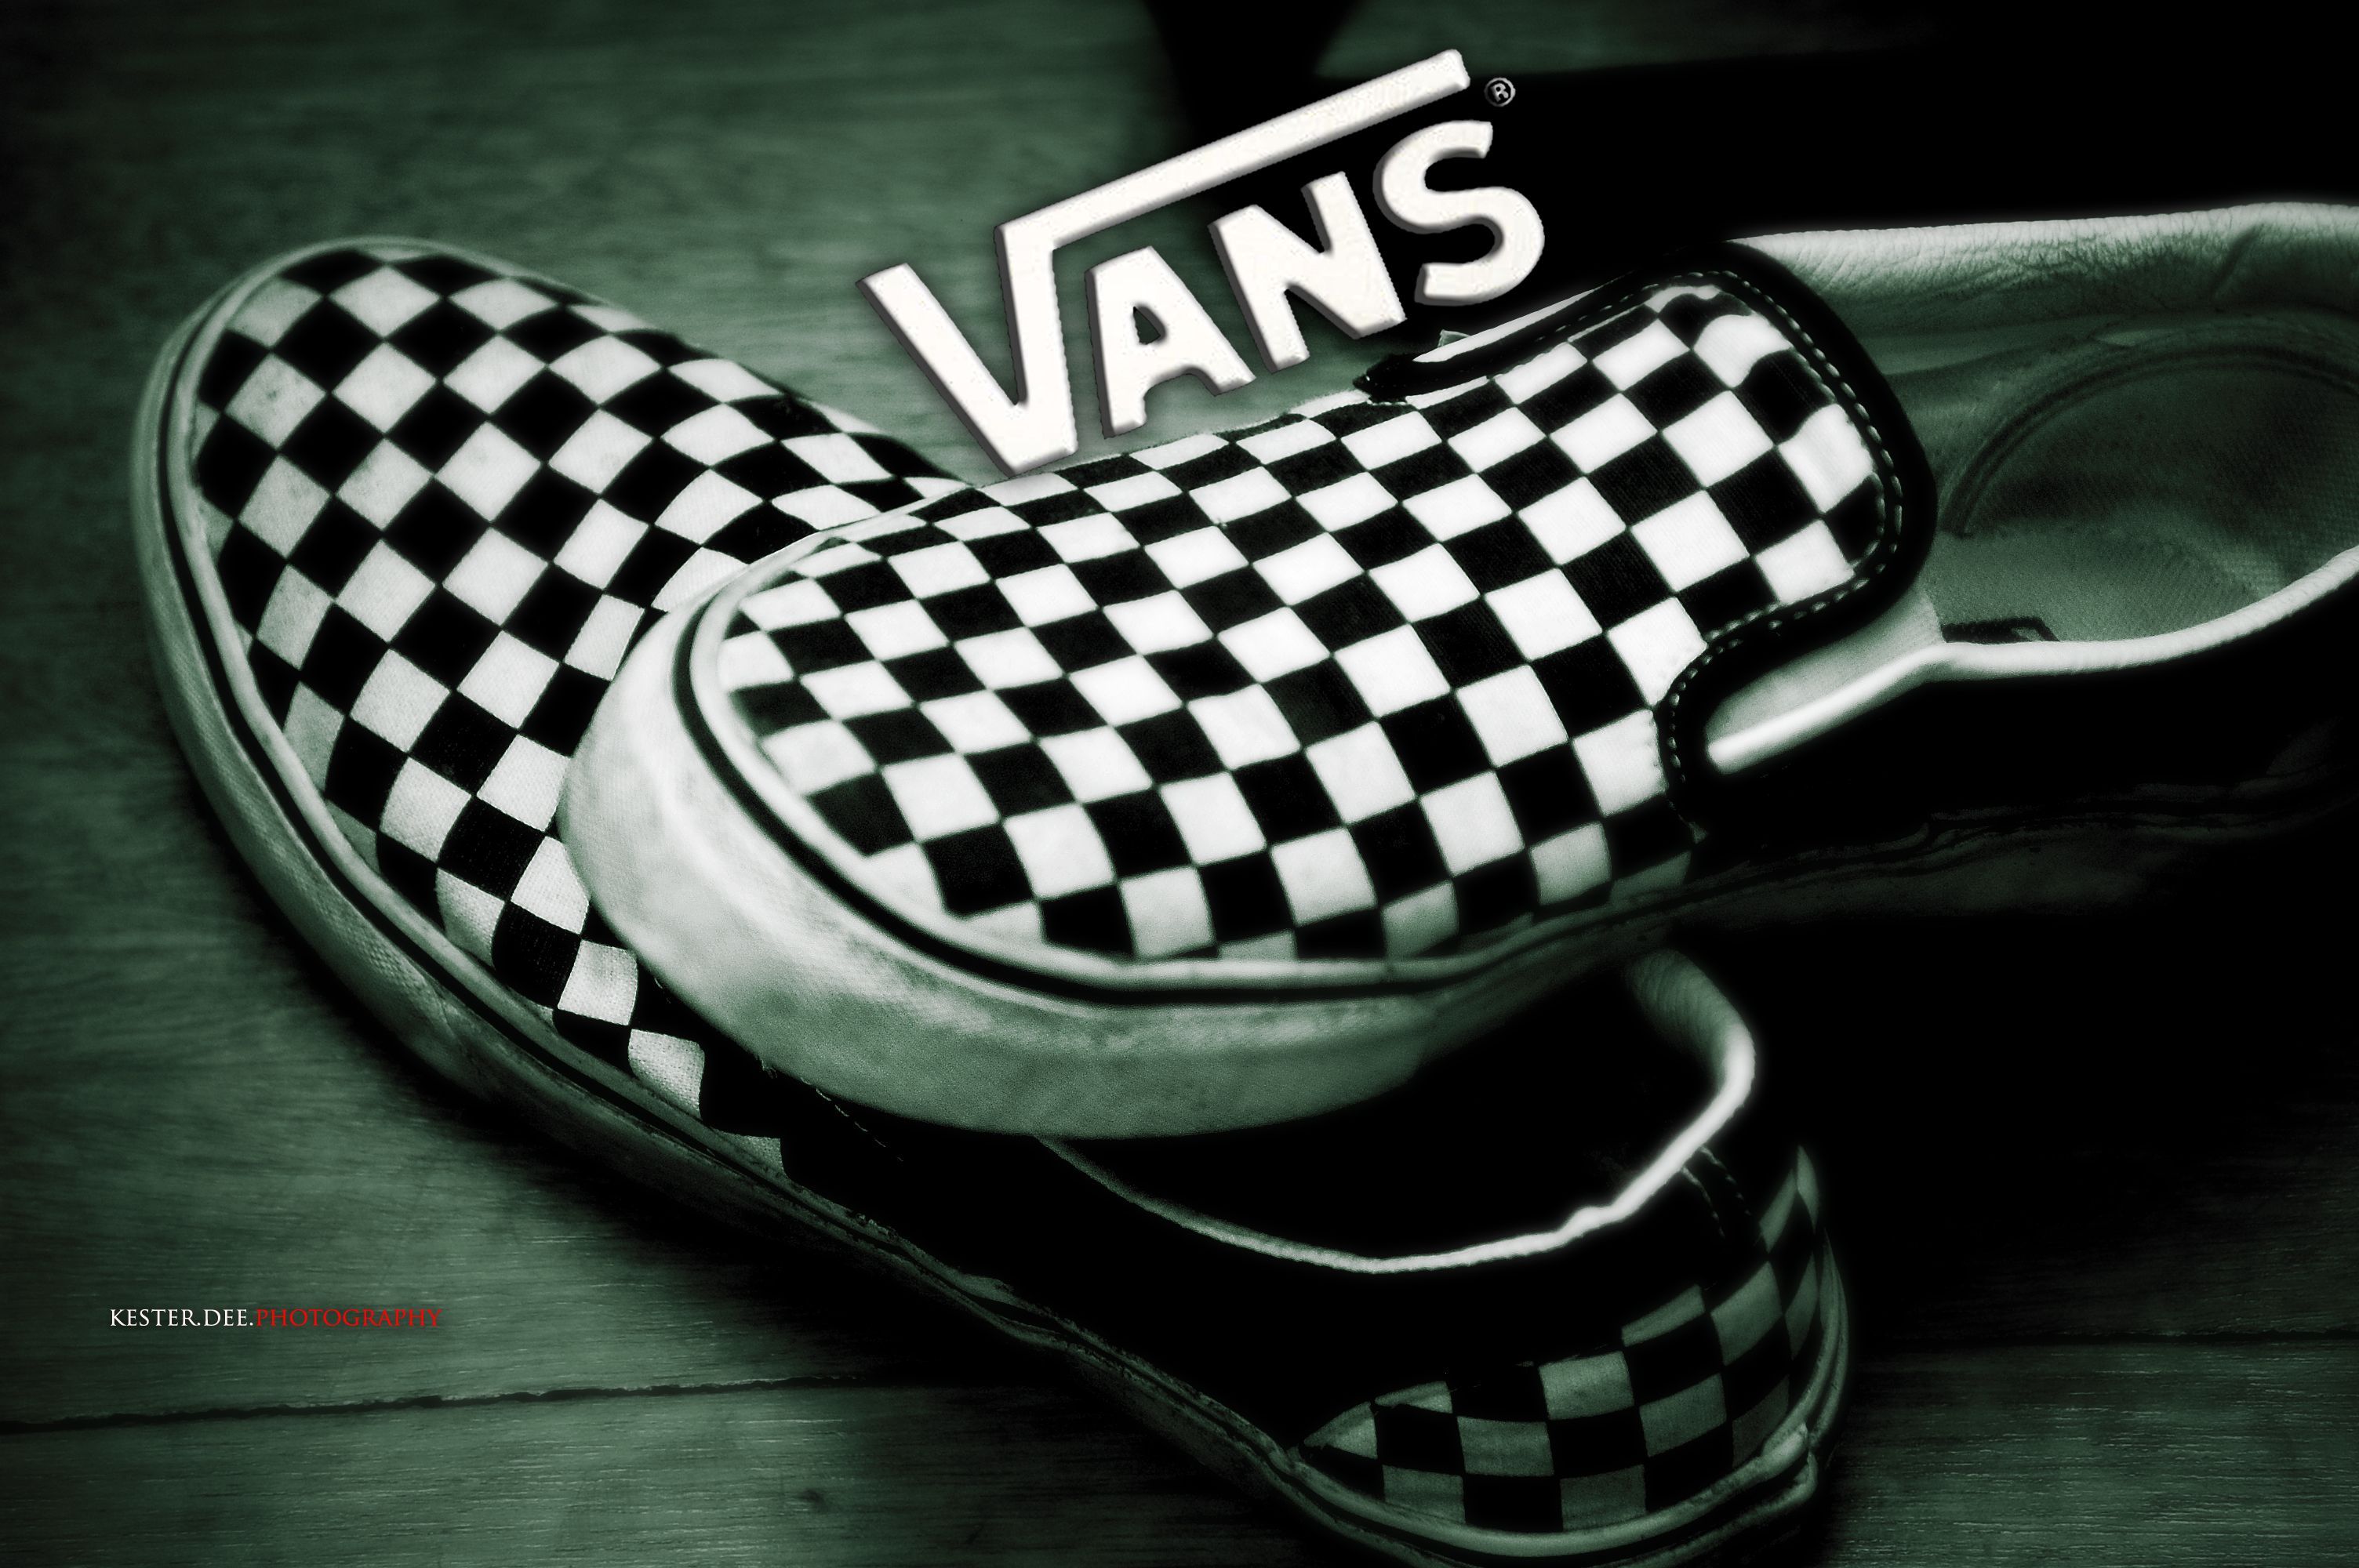 Vans Shoes Wallpapers